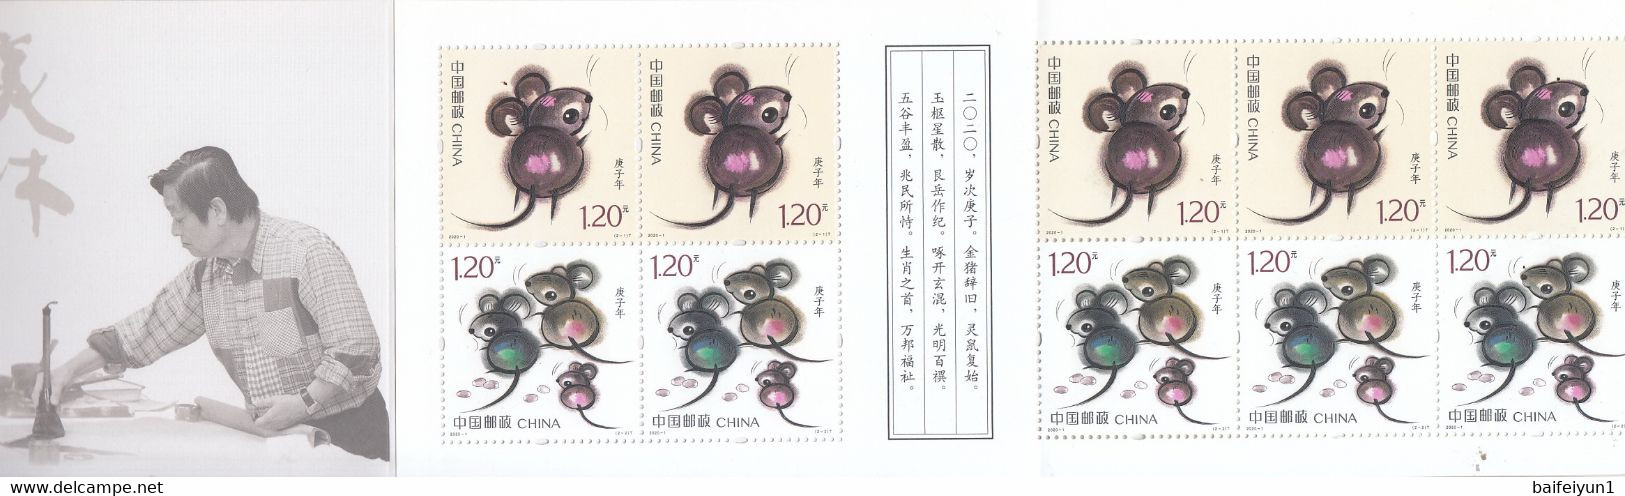 CHINA 2020 Whole Year of Rat  sheetlet Stamp Year set (8v)